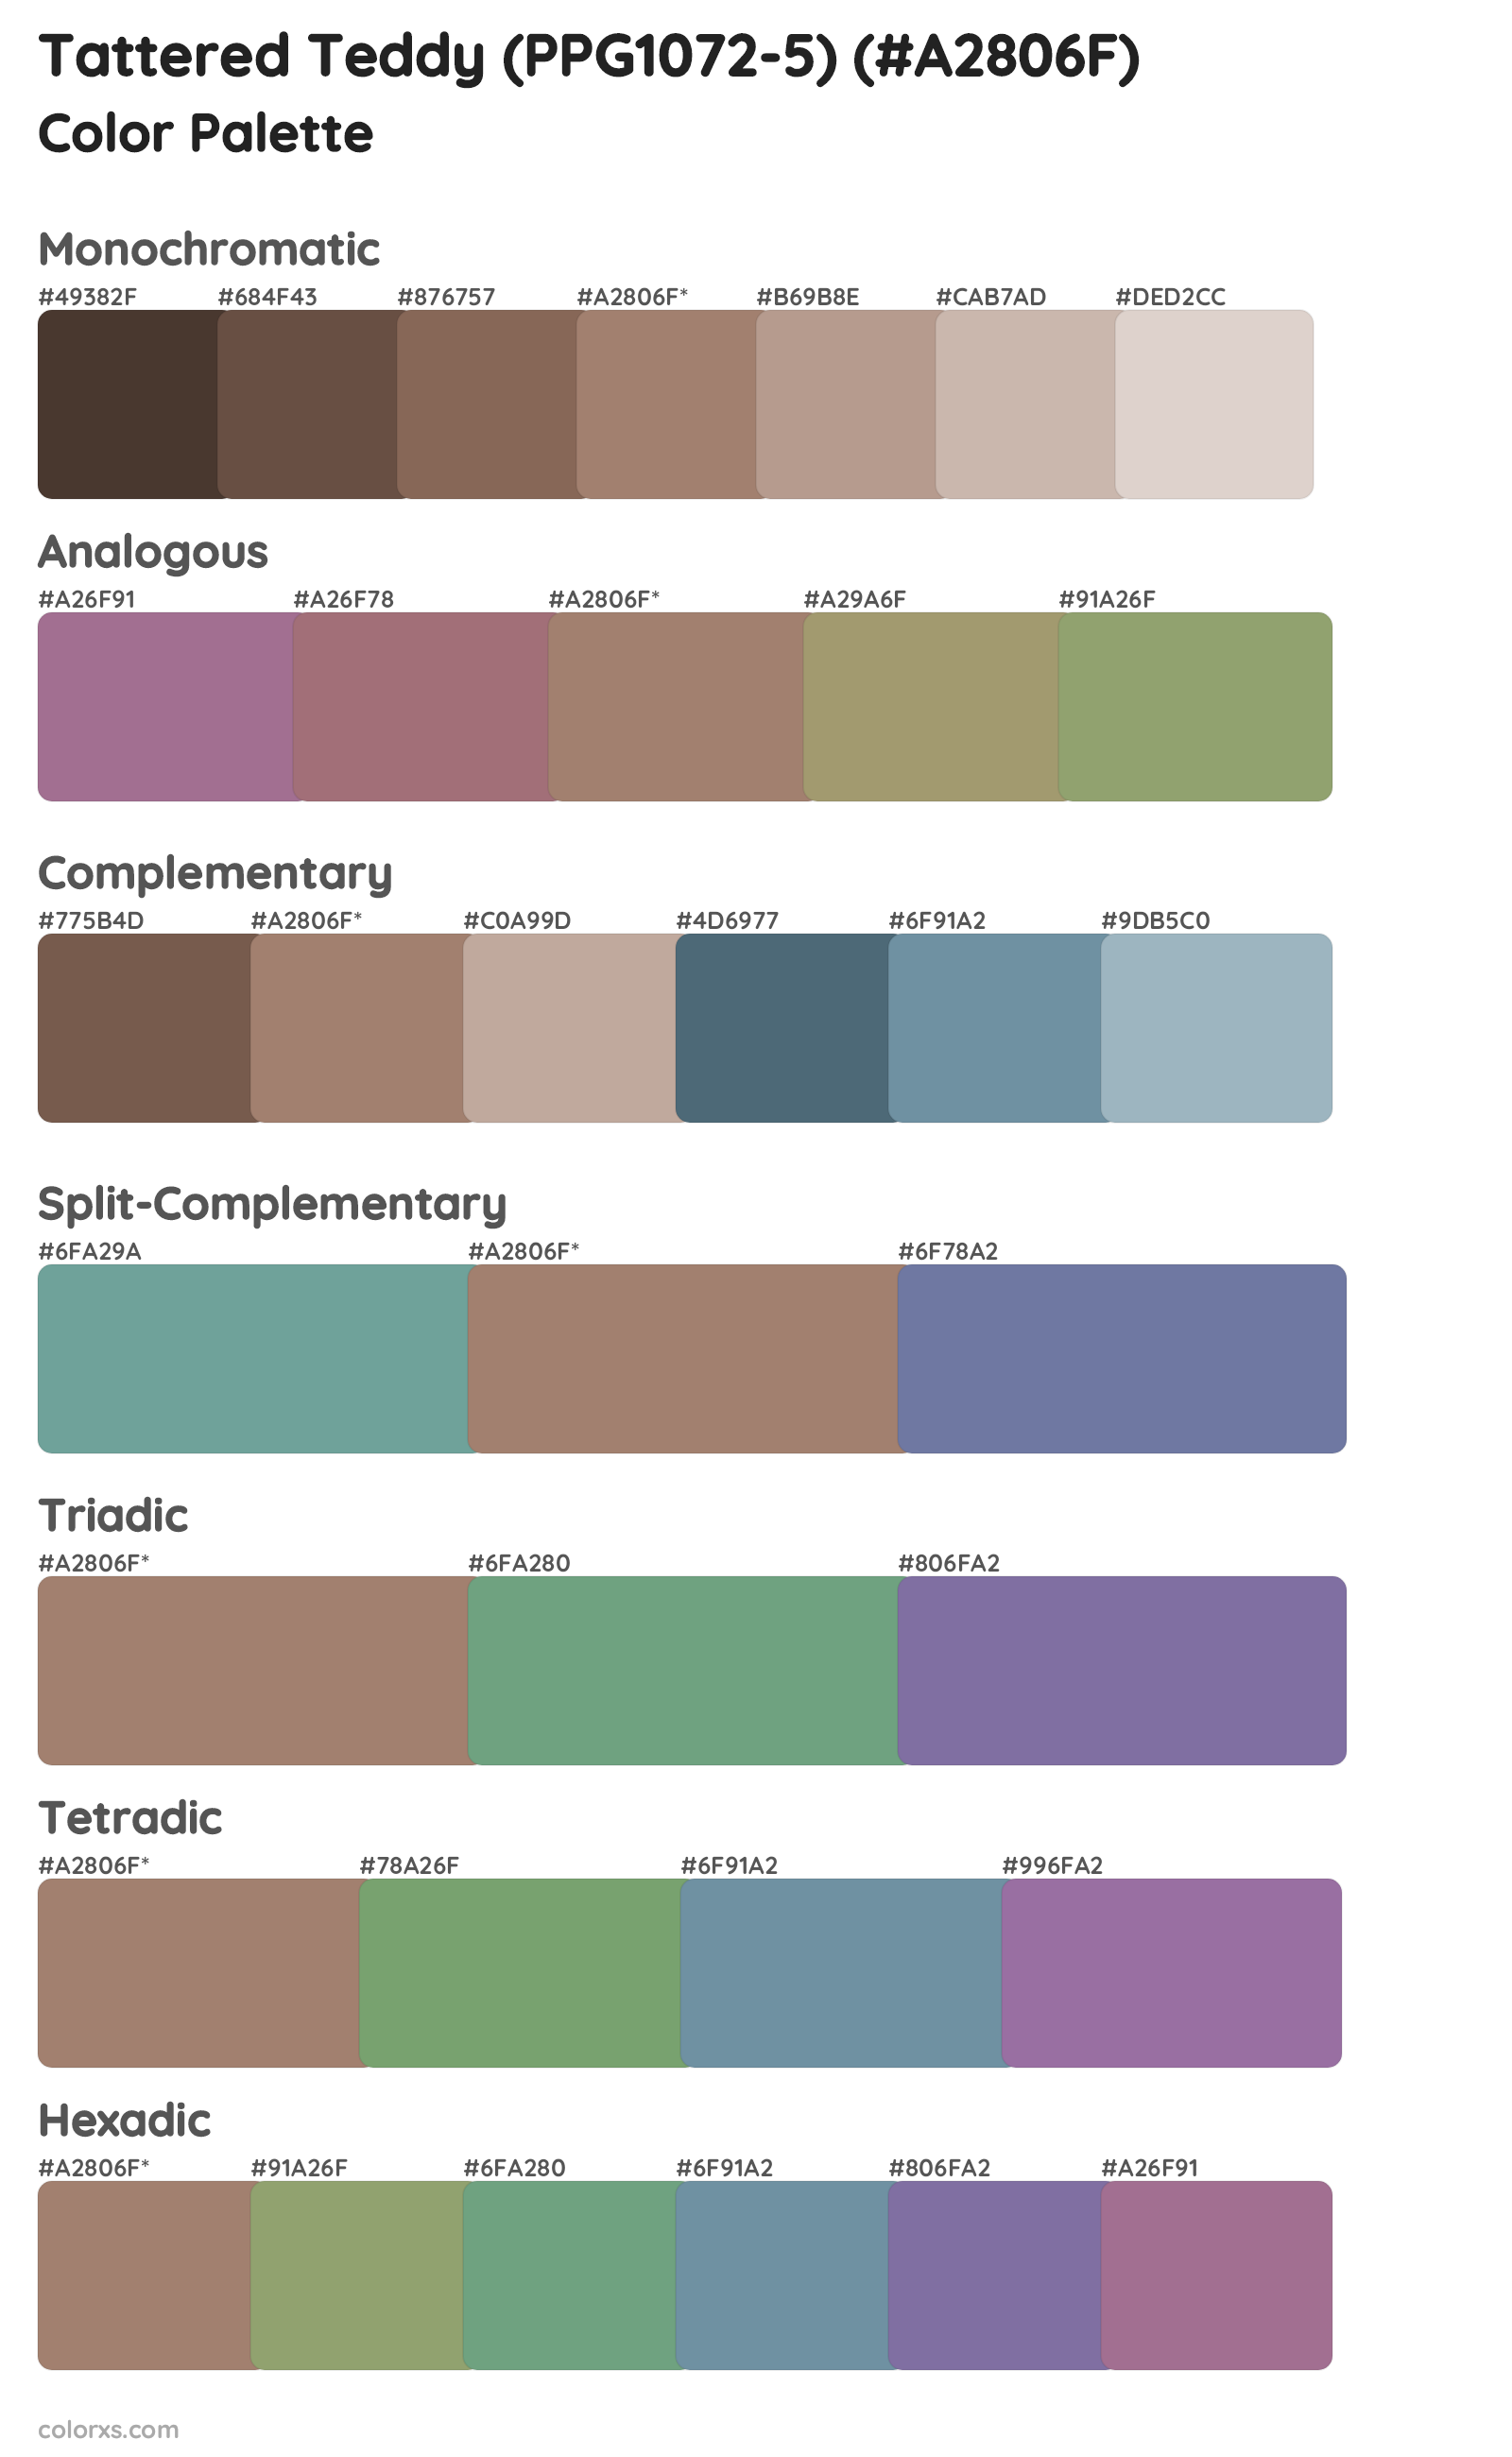 Tattered Teddy (PPG1072-5) Color Scheme Palettes